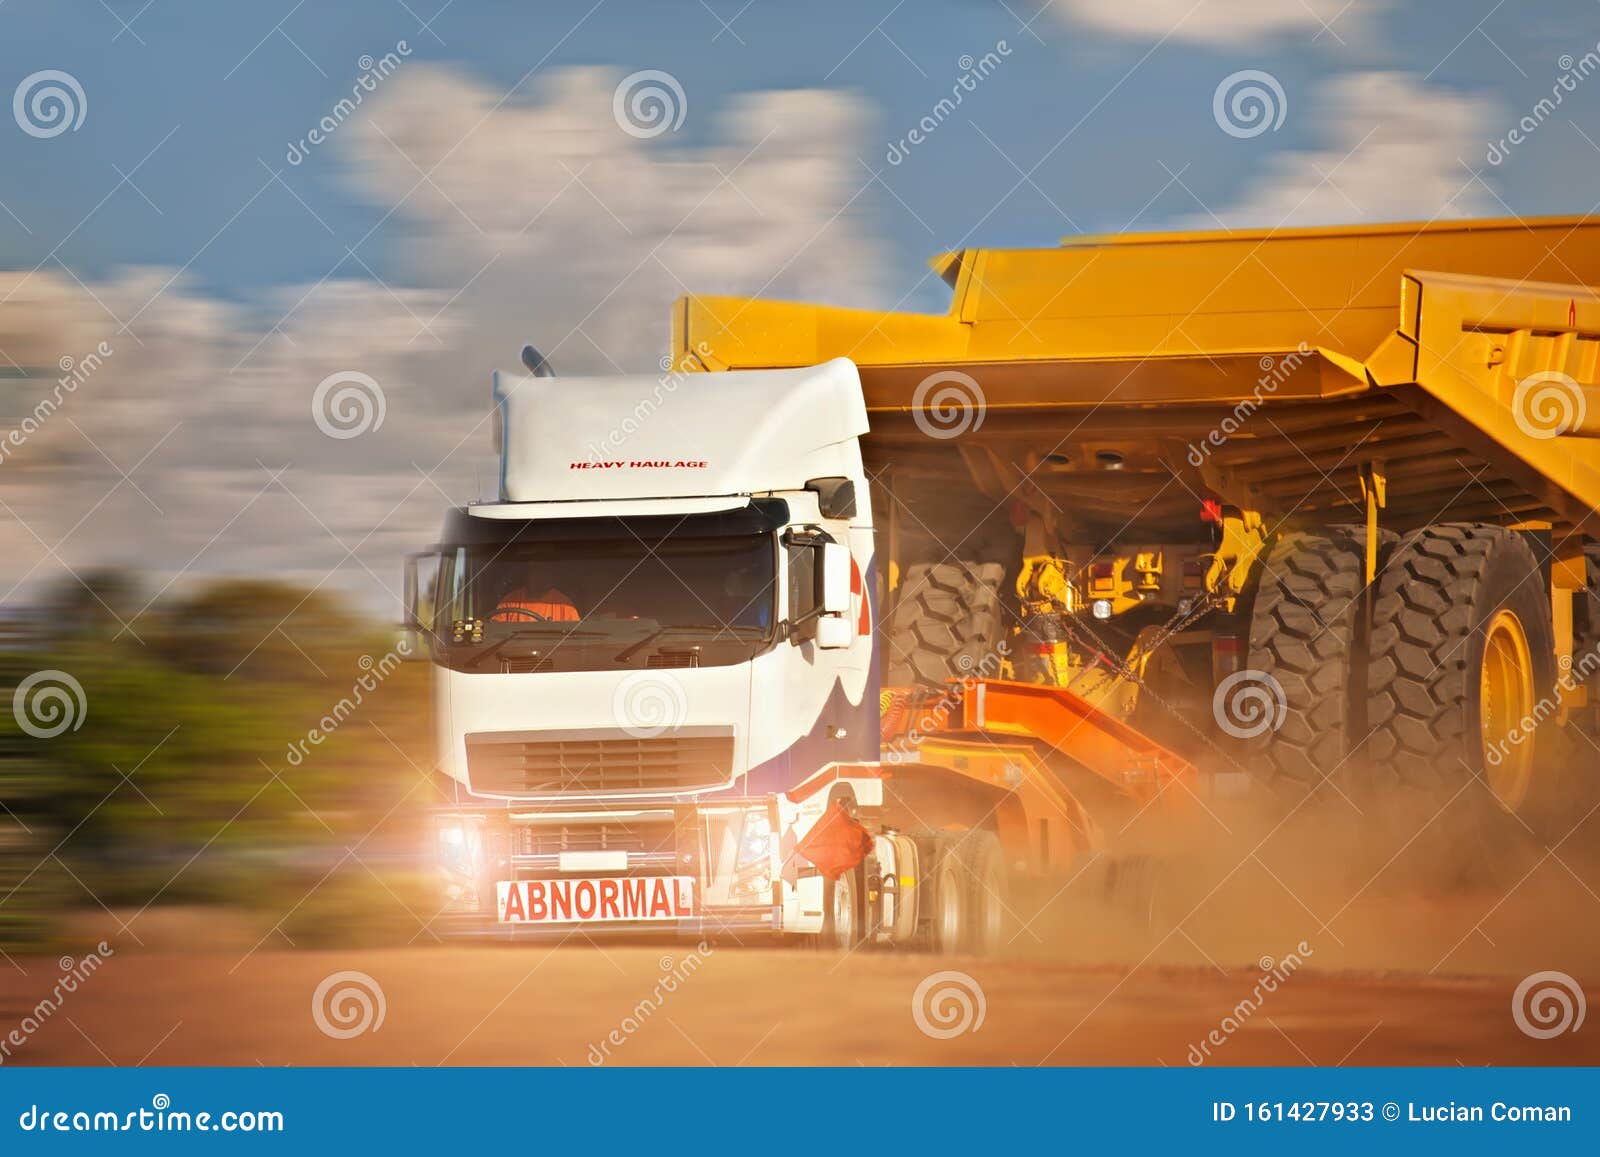 heavy duty truck abnormal haulage